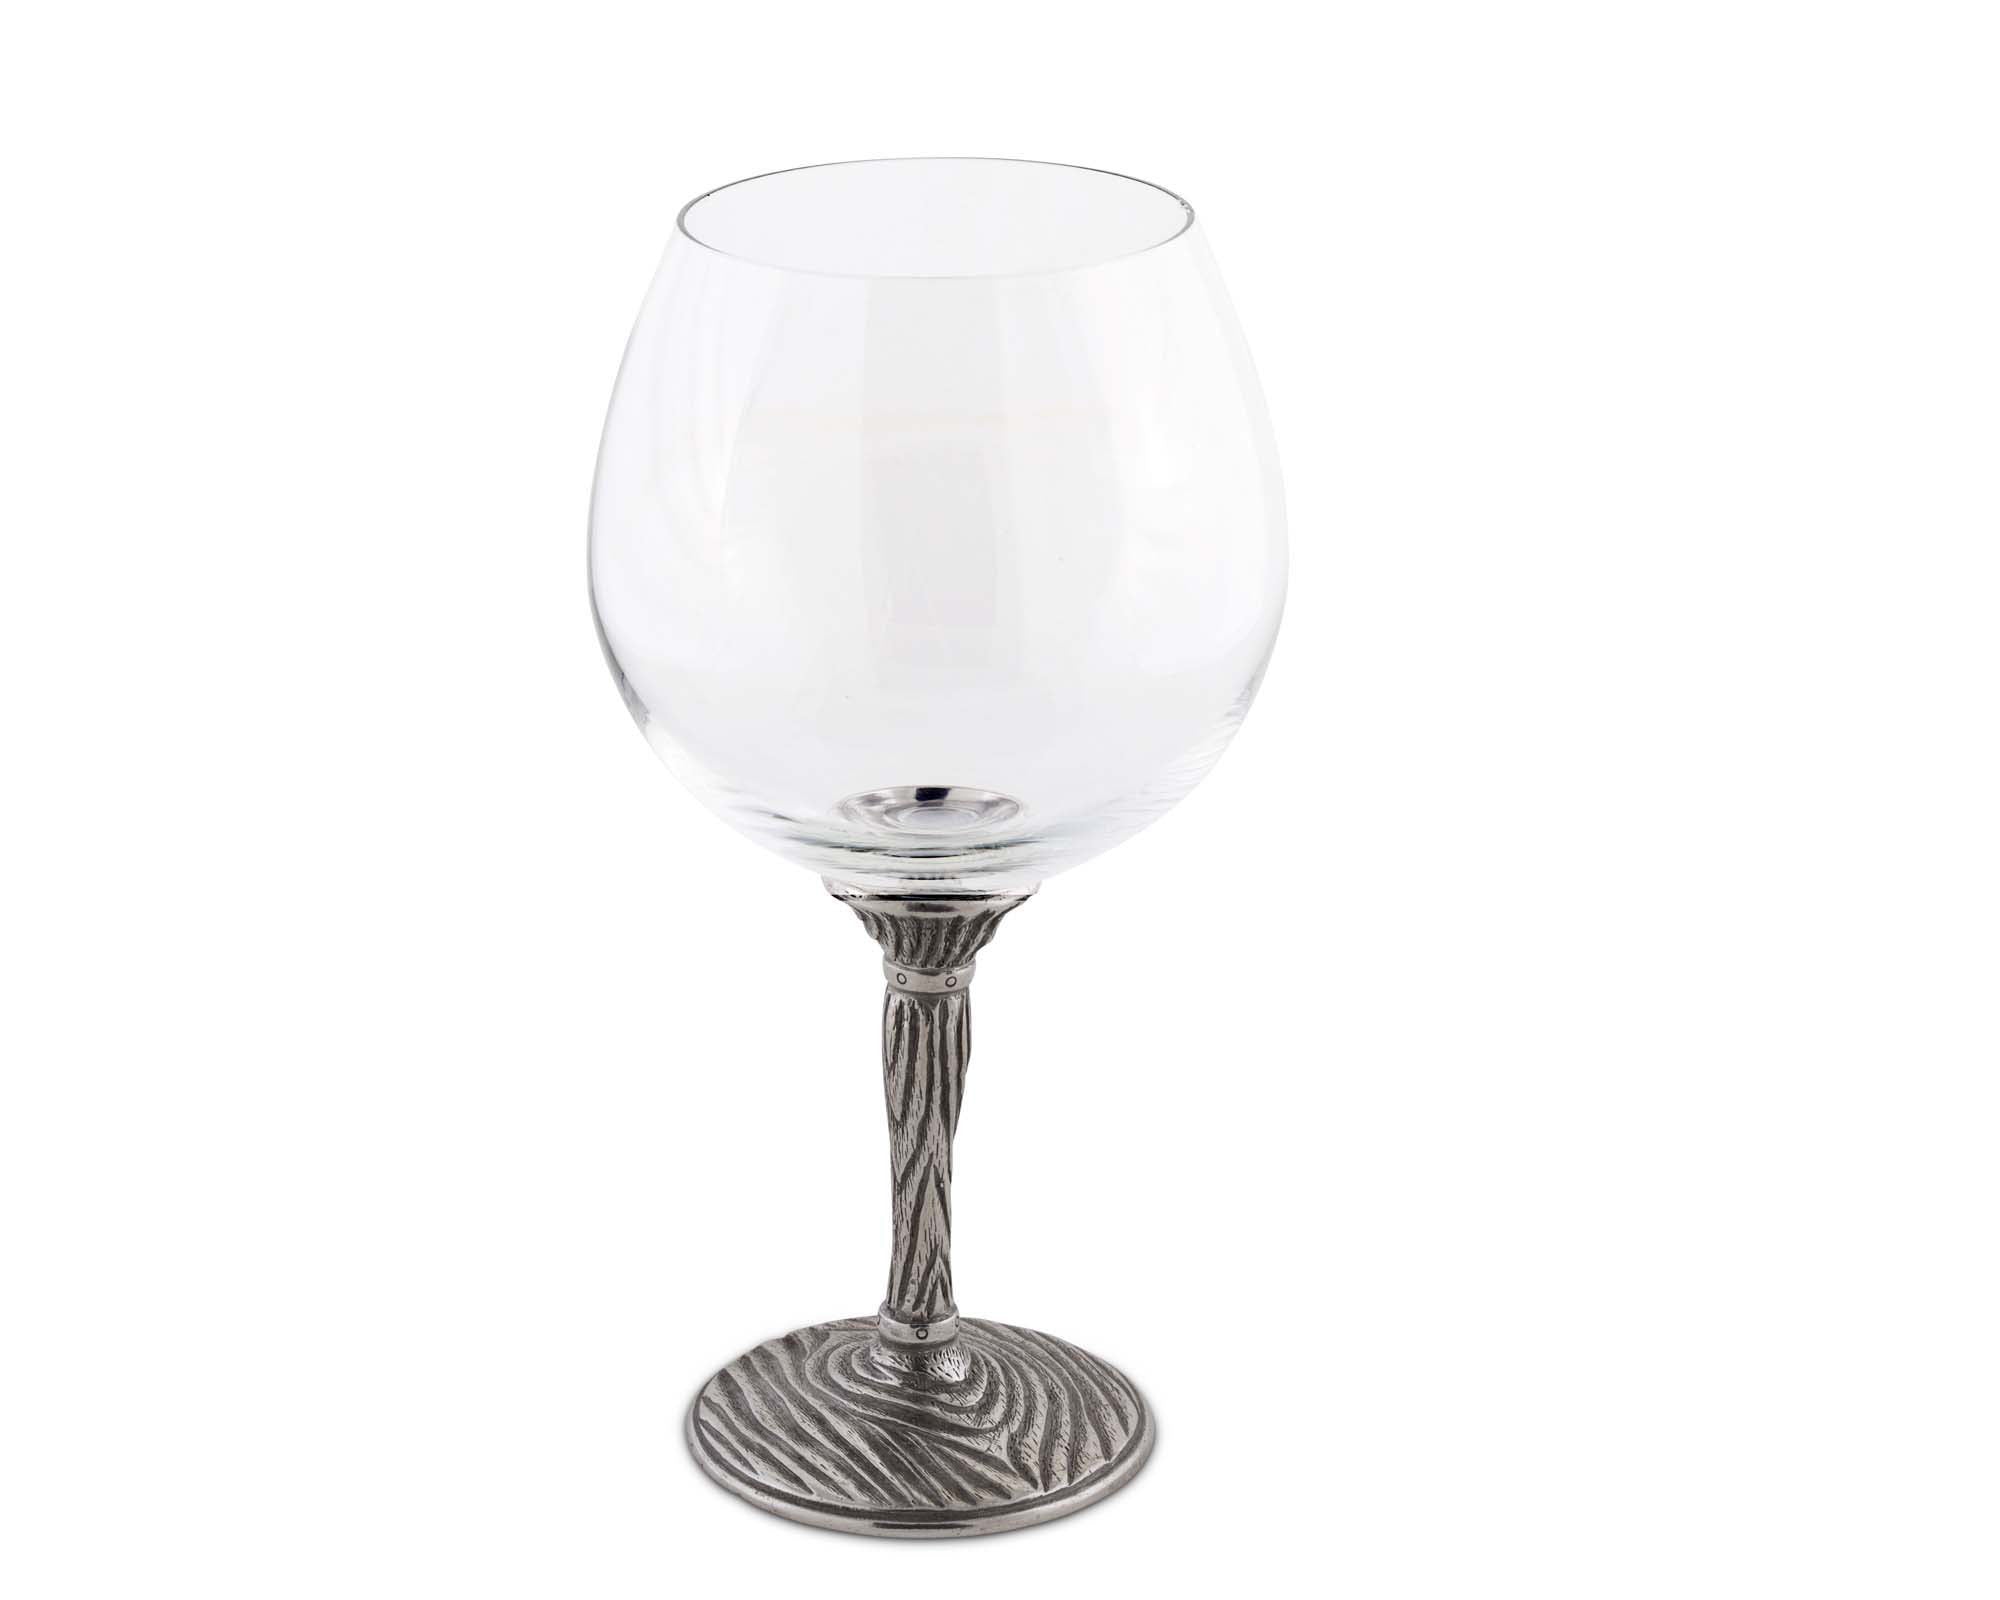 Bestbling Pewter Decorative Crystal Wine Glass Enamel